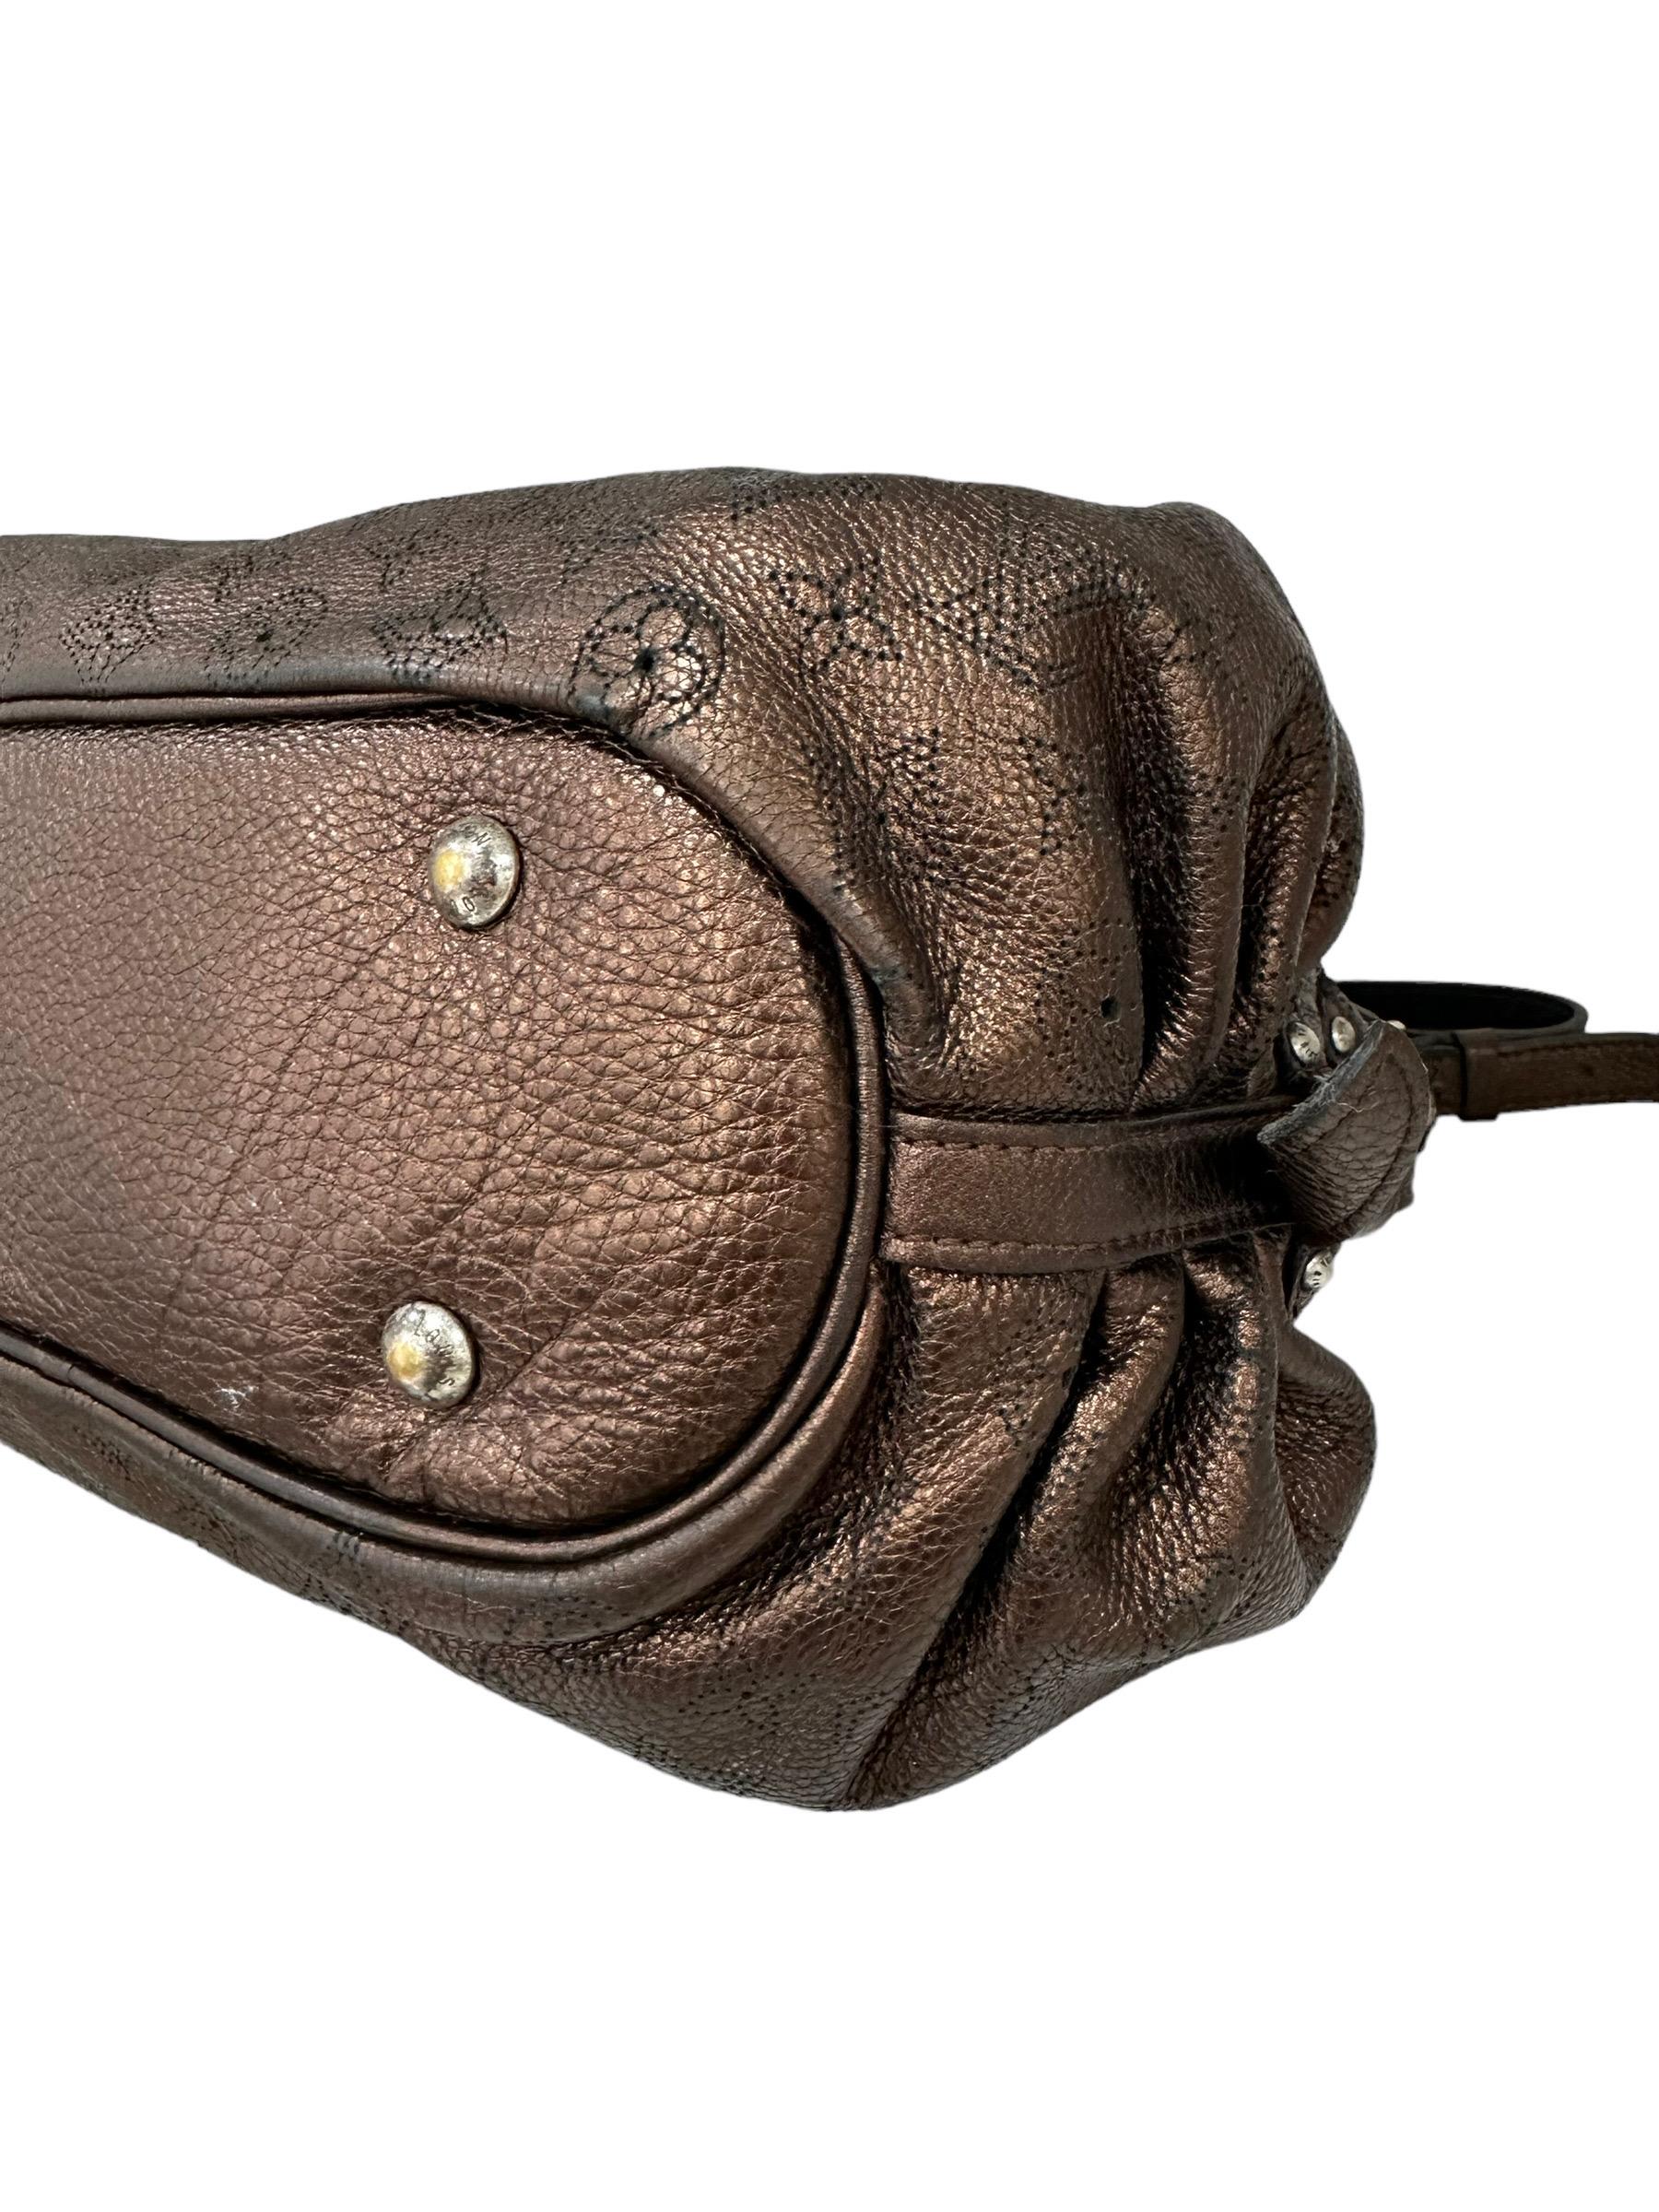 2008 Louis Vuitton Mahina XS Metallic Bronze Monogram Shoulder Bag For Sale 6